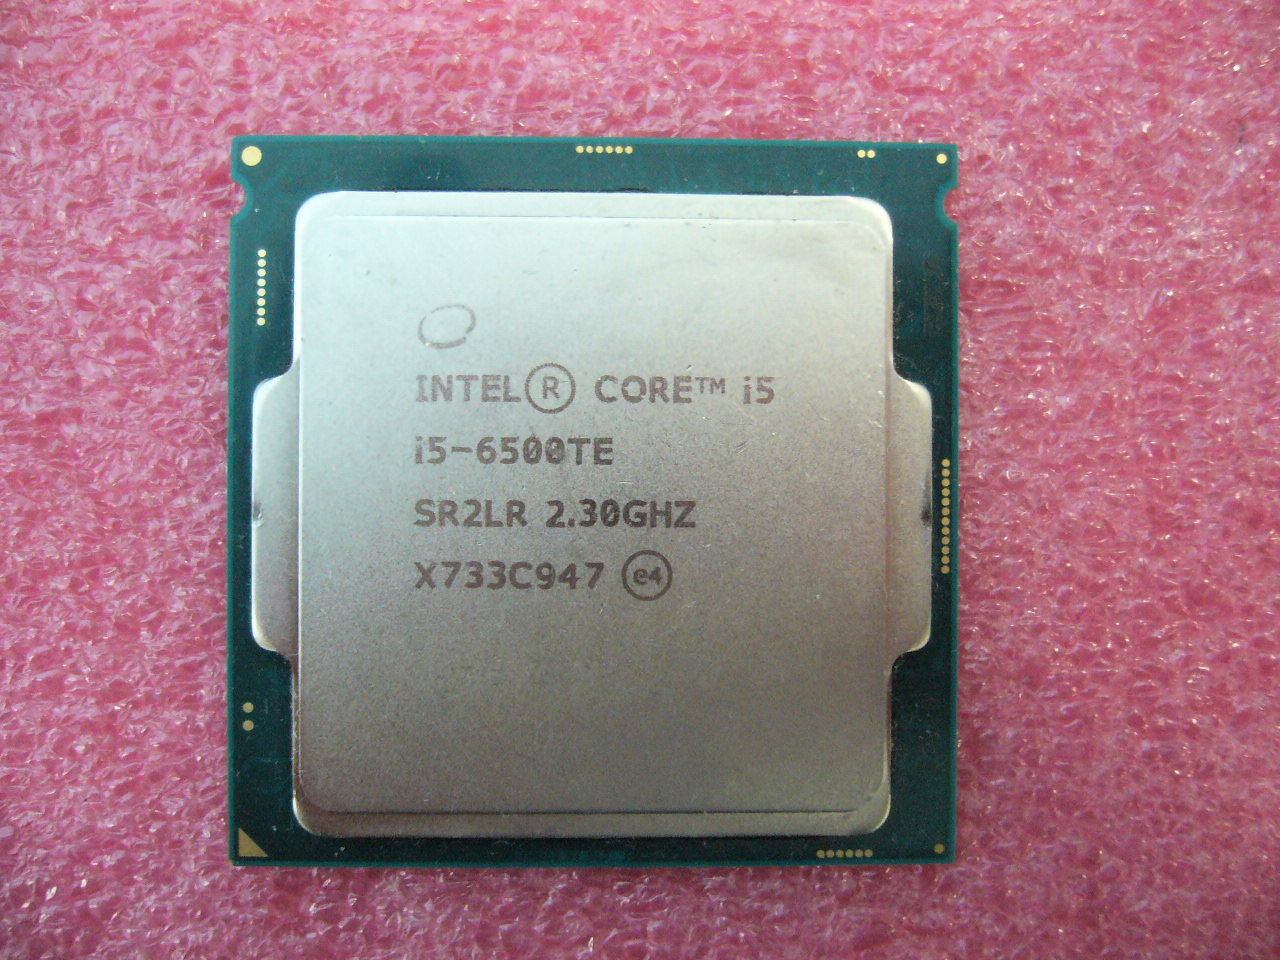 QTY 1x Intel CPU i5-6500TE Quad-Cores 2.30Ghz 6MB LGA1151 SR2LR NOT WORKING